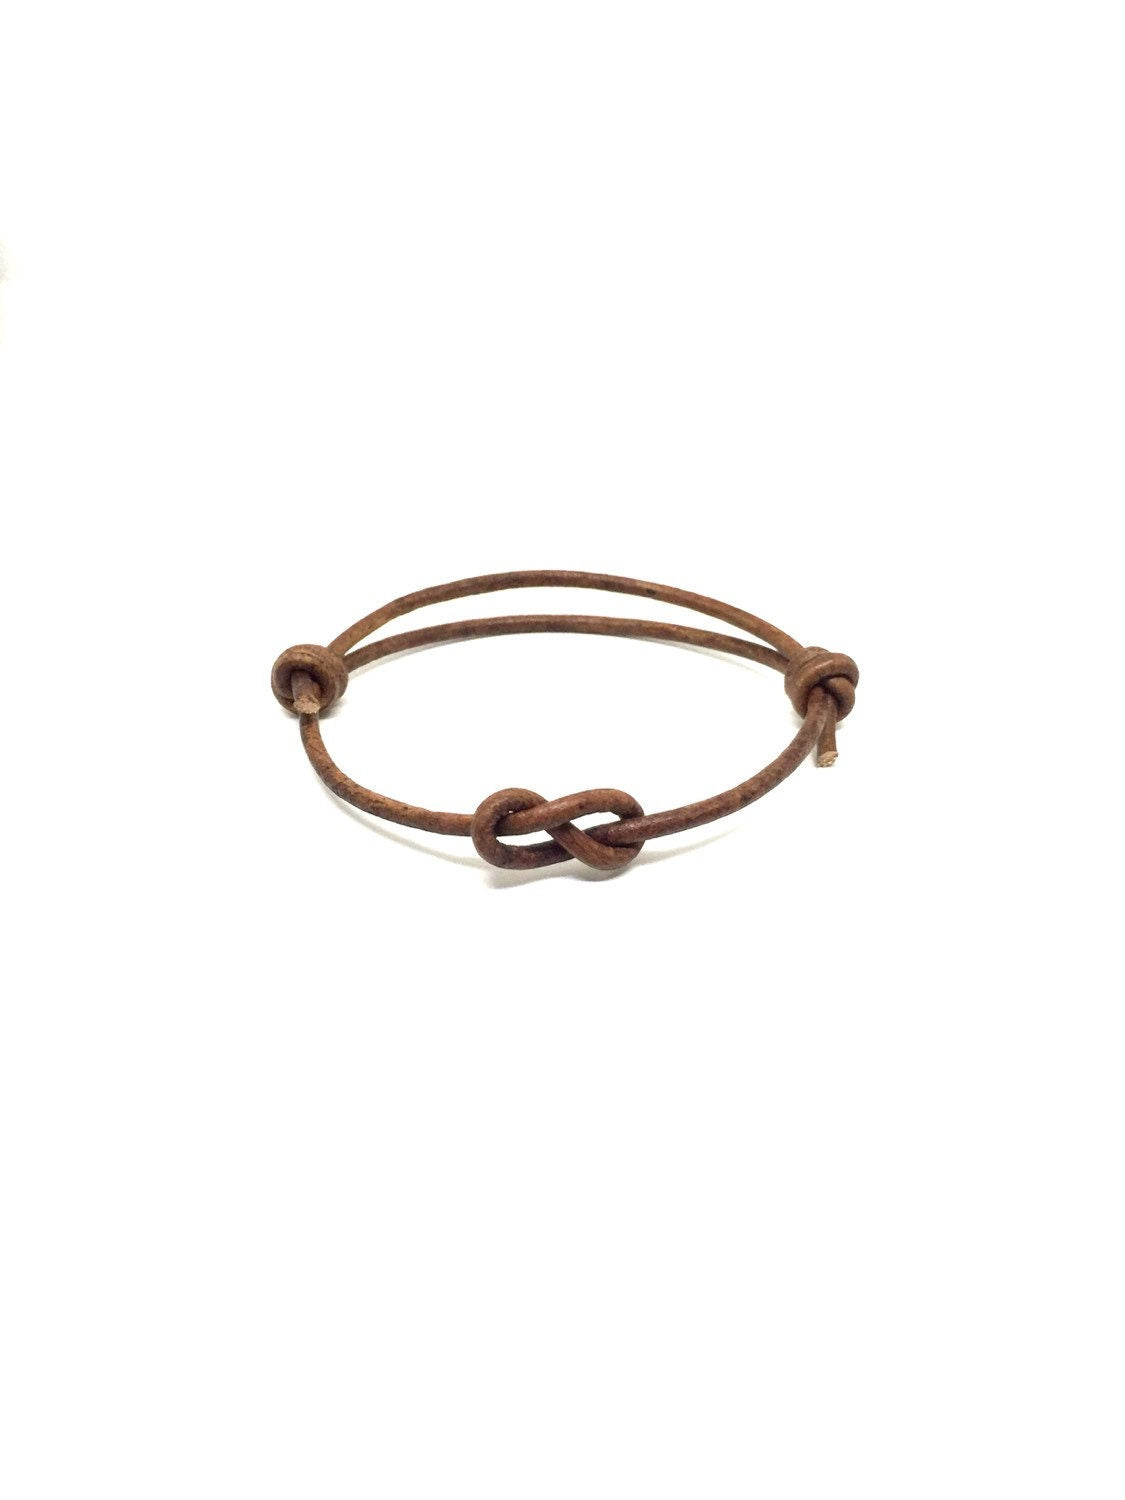 Simple Bracelet, Leather Bracelet, Infinity Knot, Matching Bracelets, Couples Bracelets, His and Hers